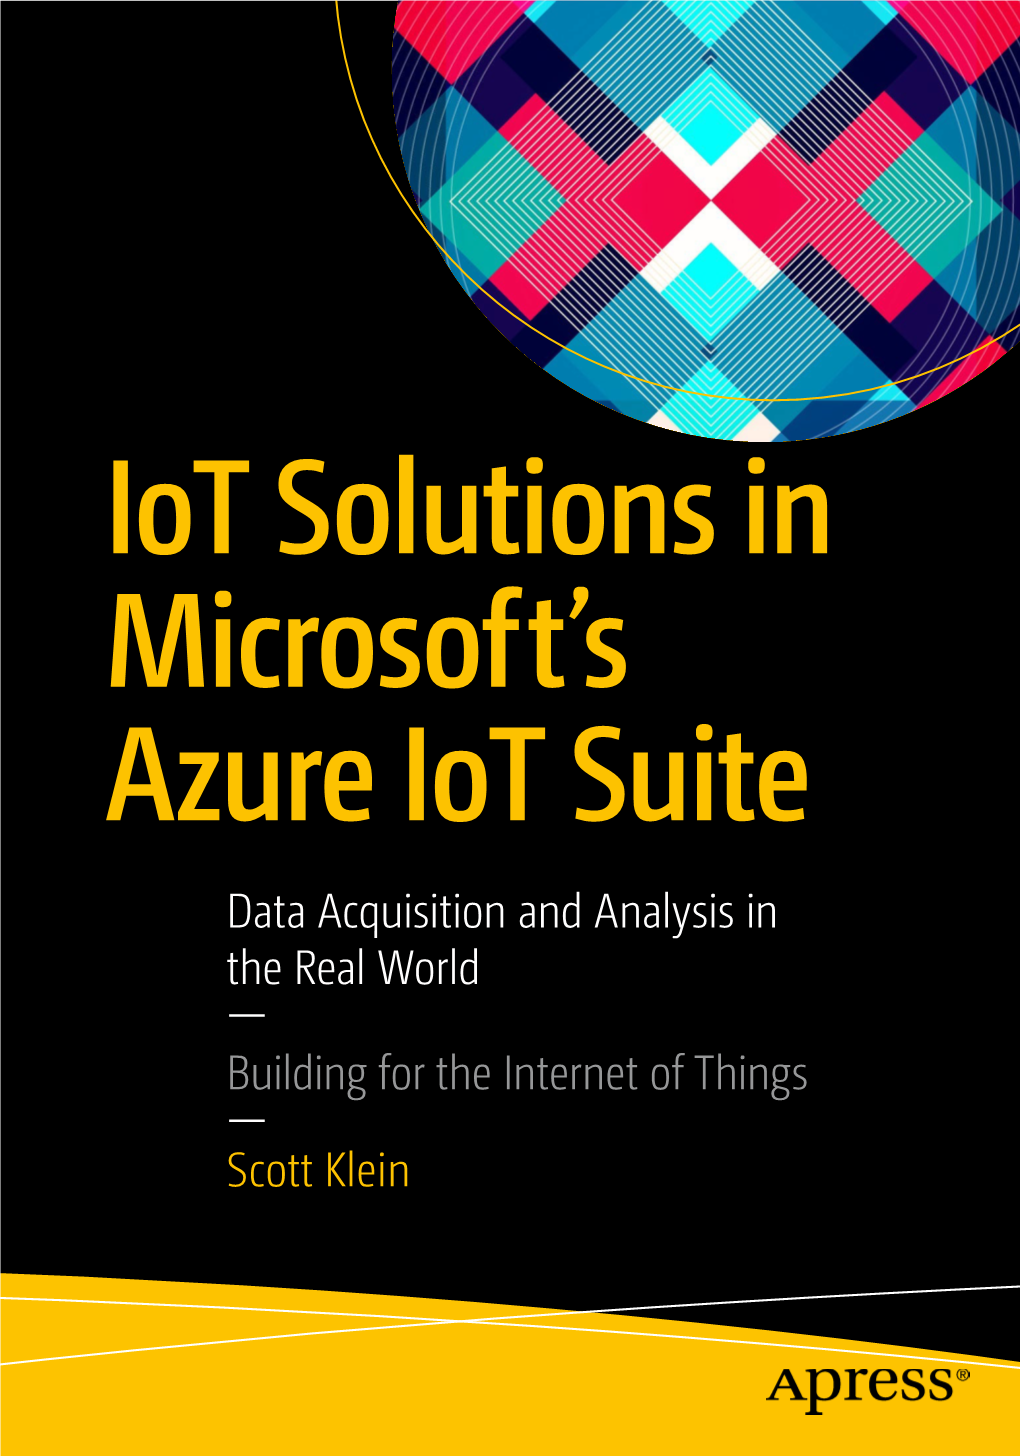 Iot Solutions in Microsoft's Azure Iot Suite